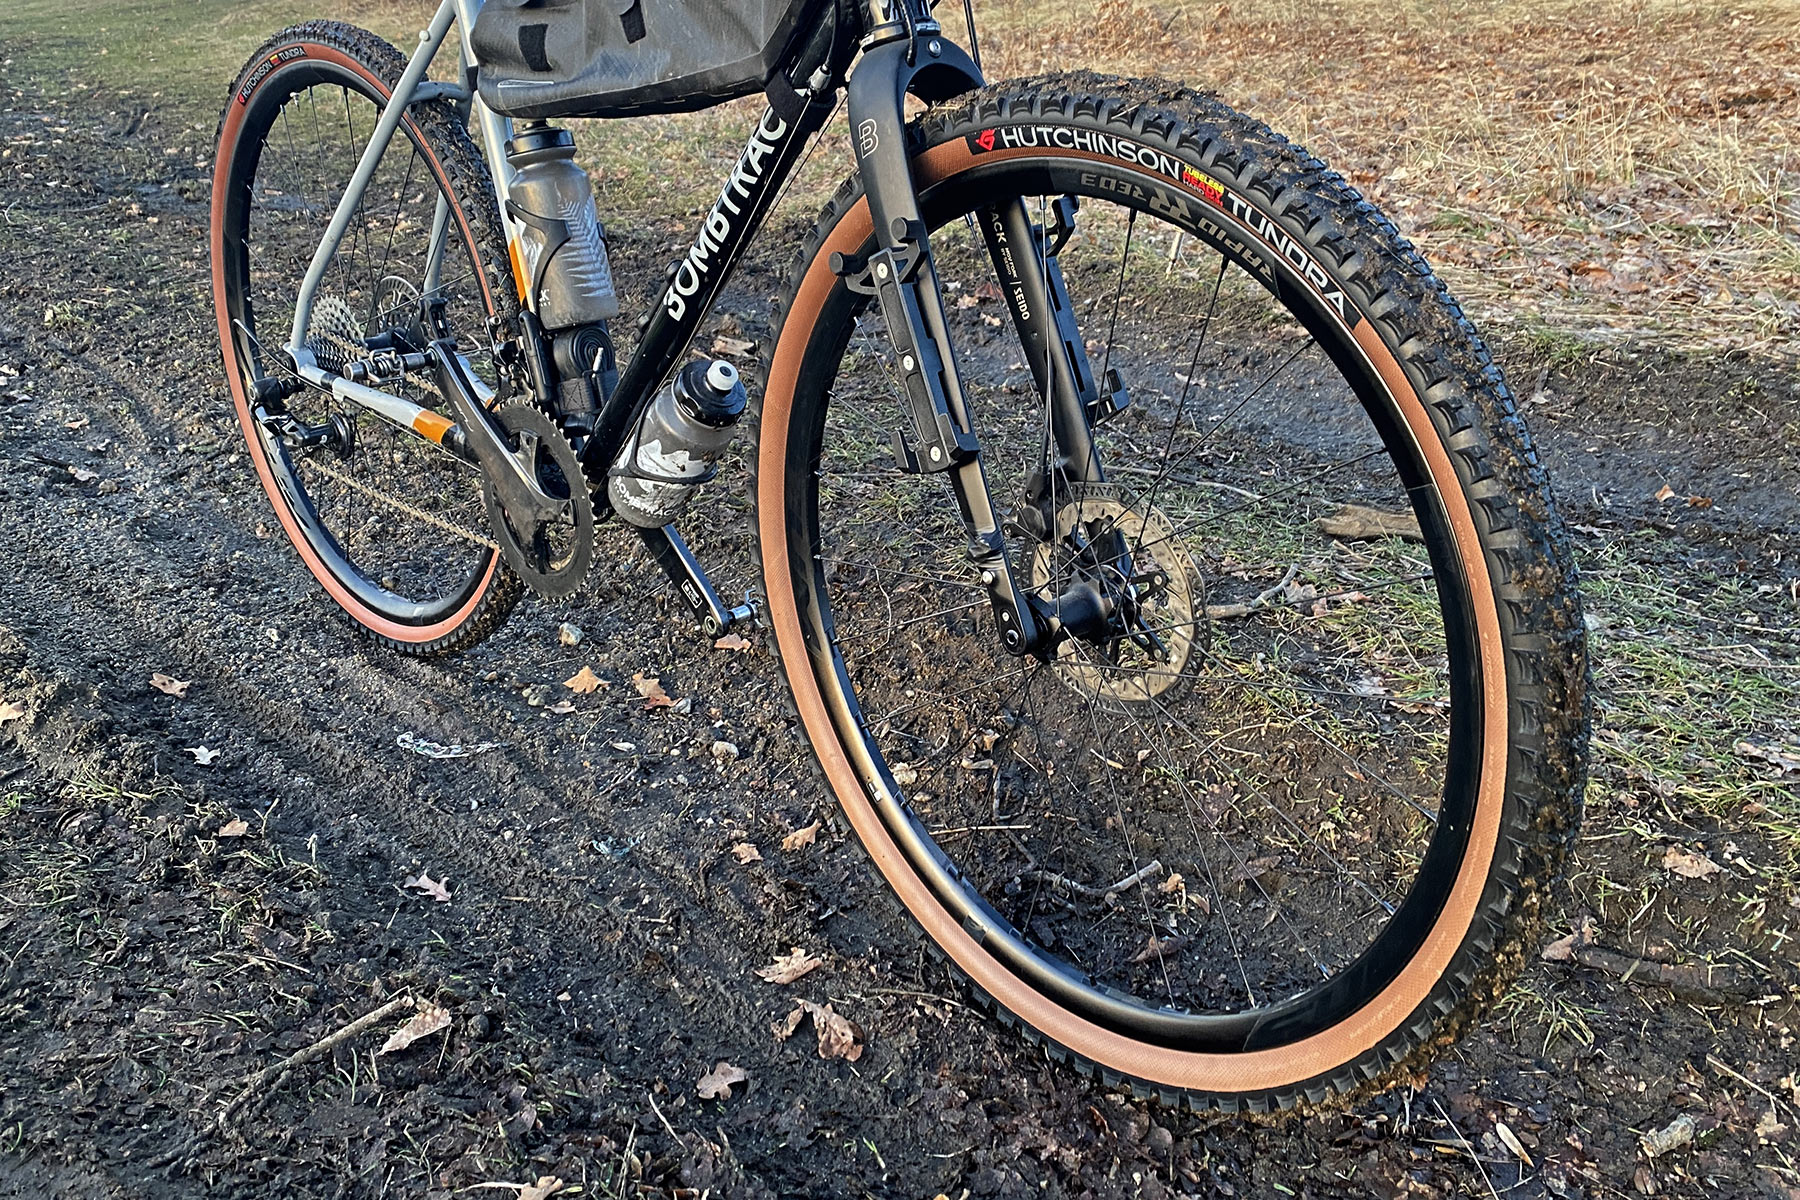 Hutchinson 50mm gravel bike tires, Overide, Touareg & Tundra, 50mm knobby Tundra tire